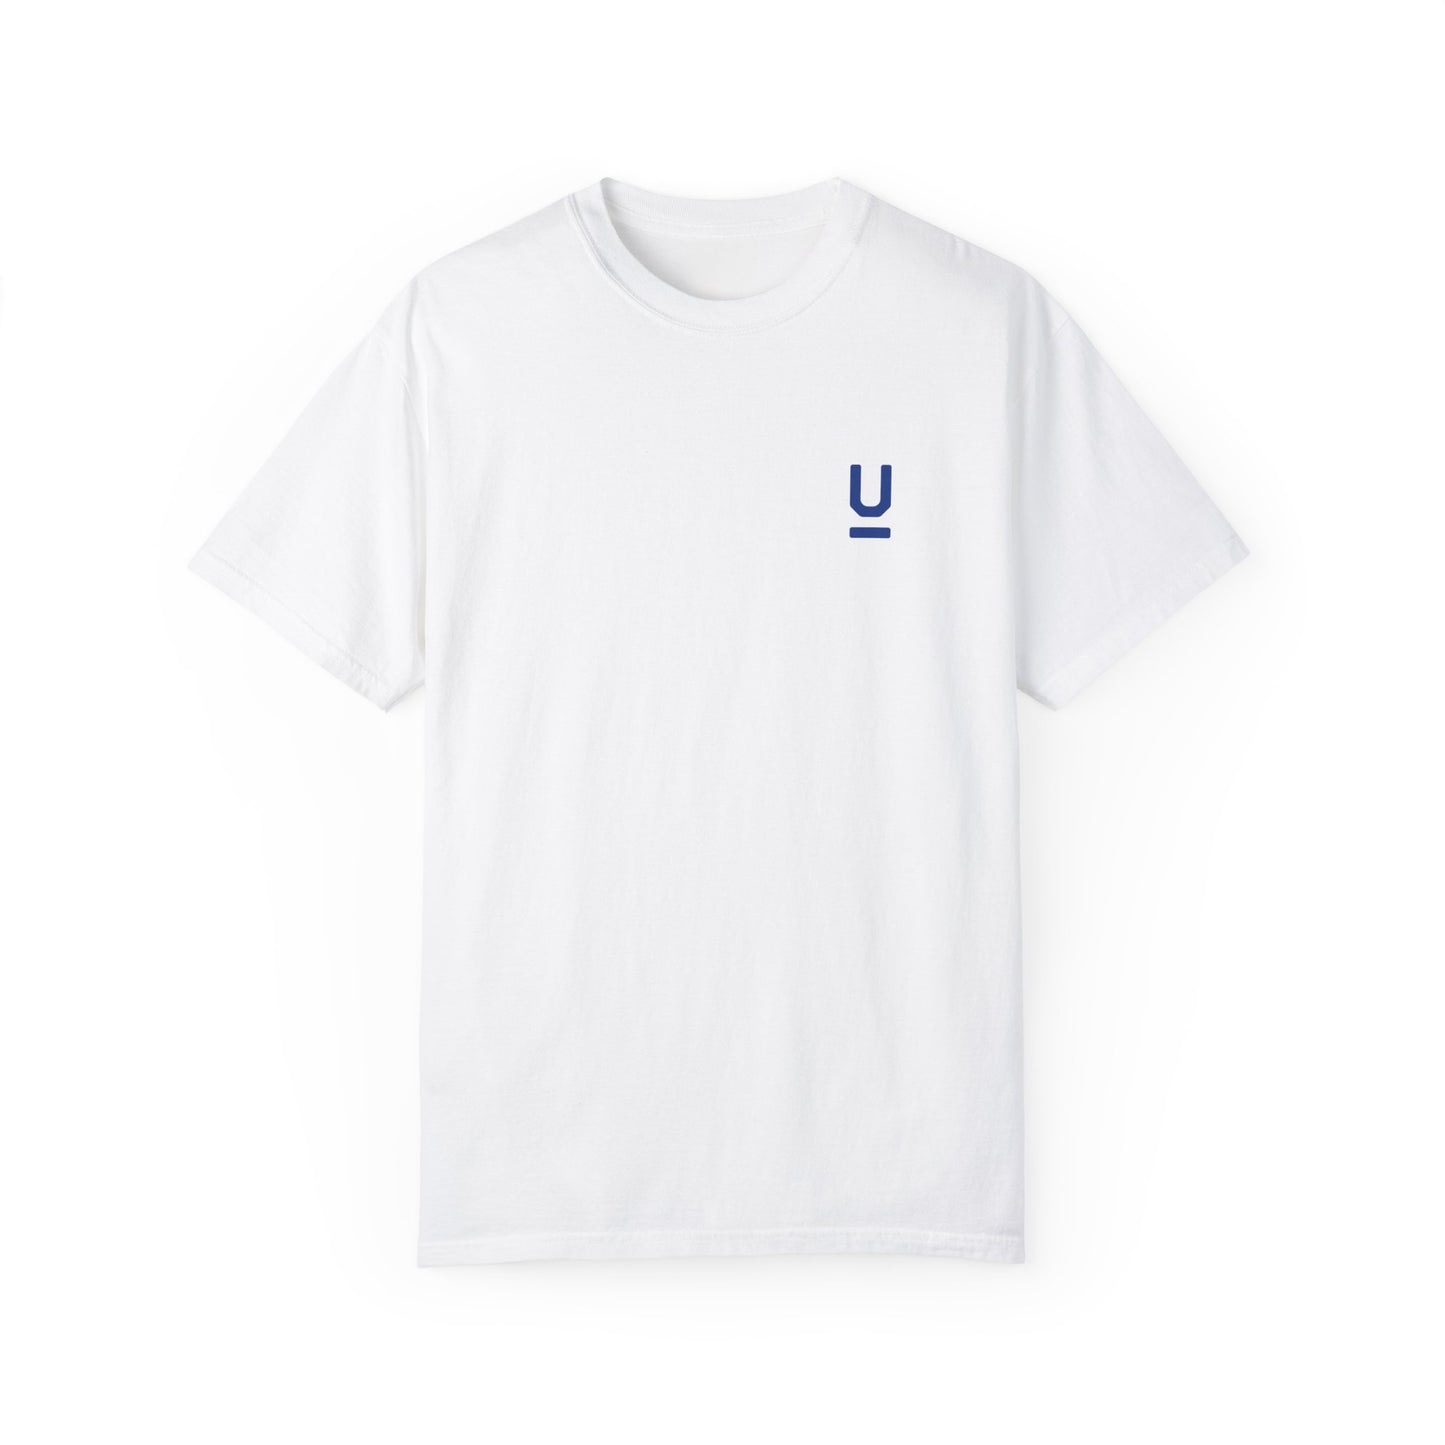 Camiseta unisex - logo azul